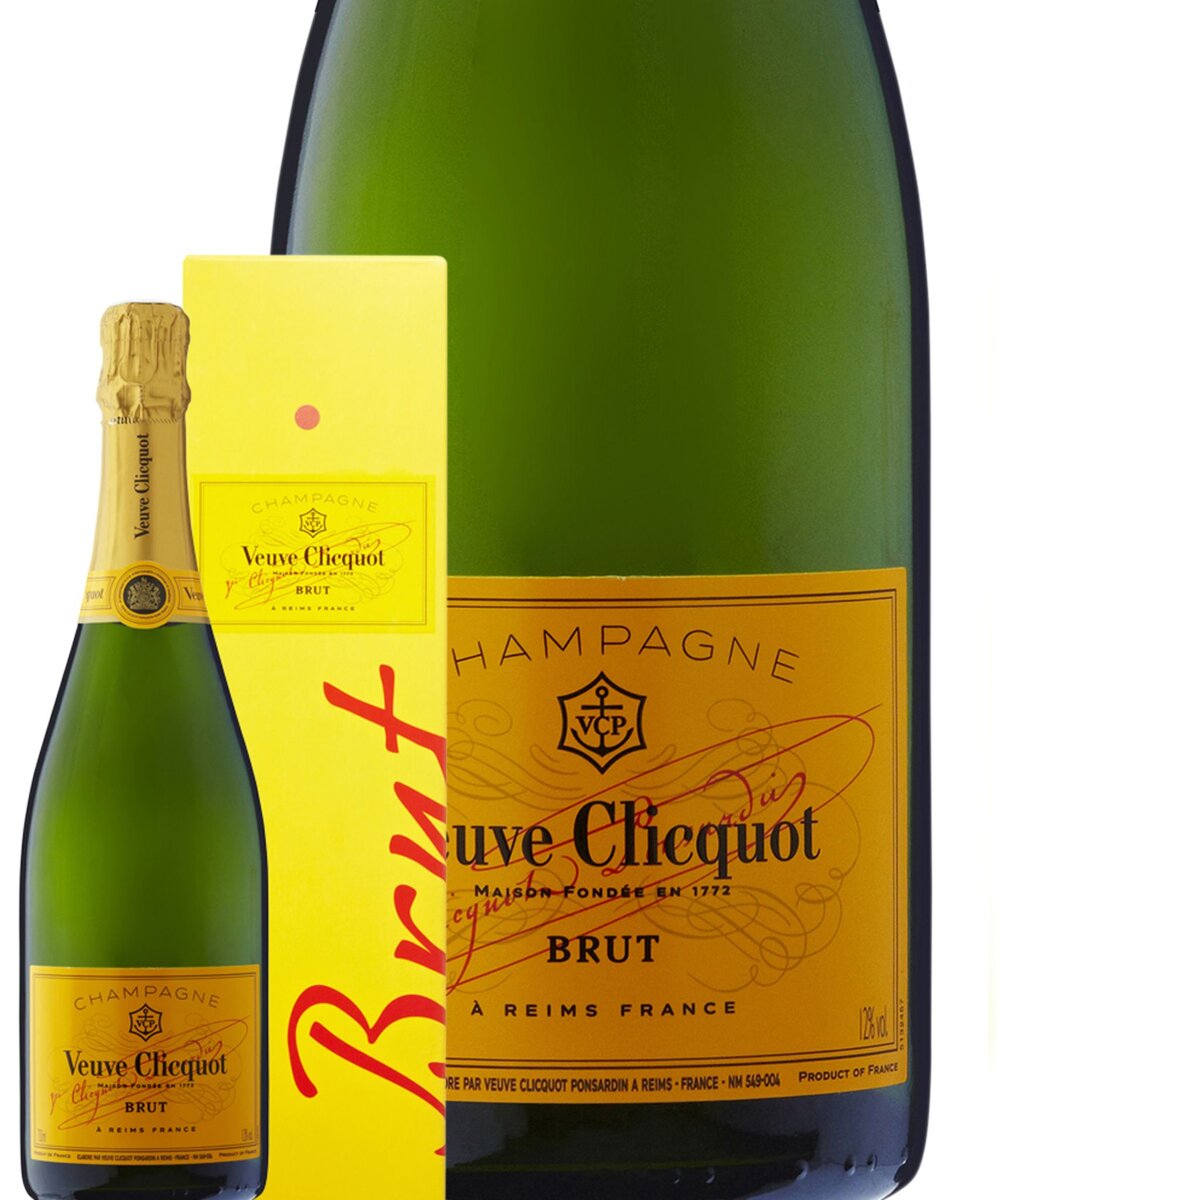 Veuve Clicquot Champagne Brut Veuve Clicquot